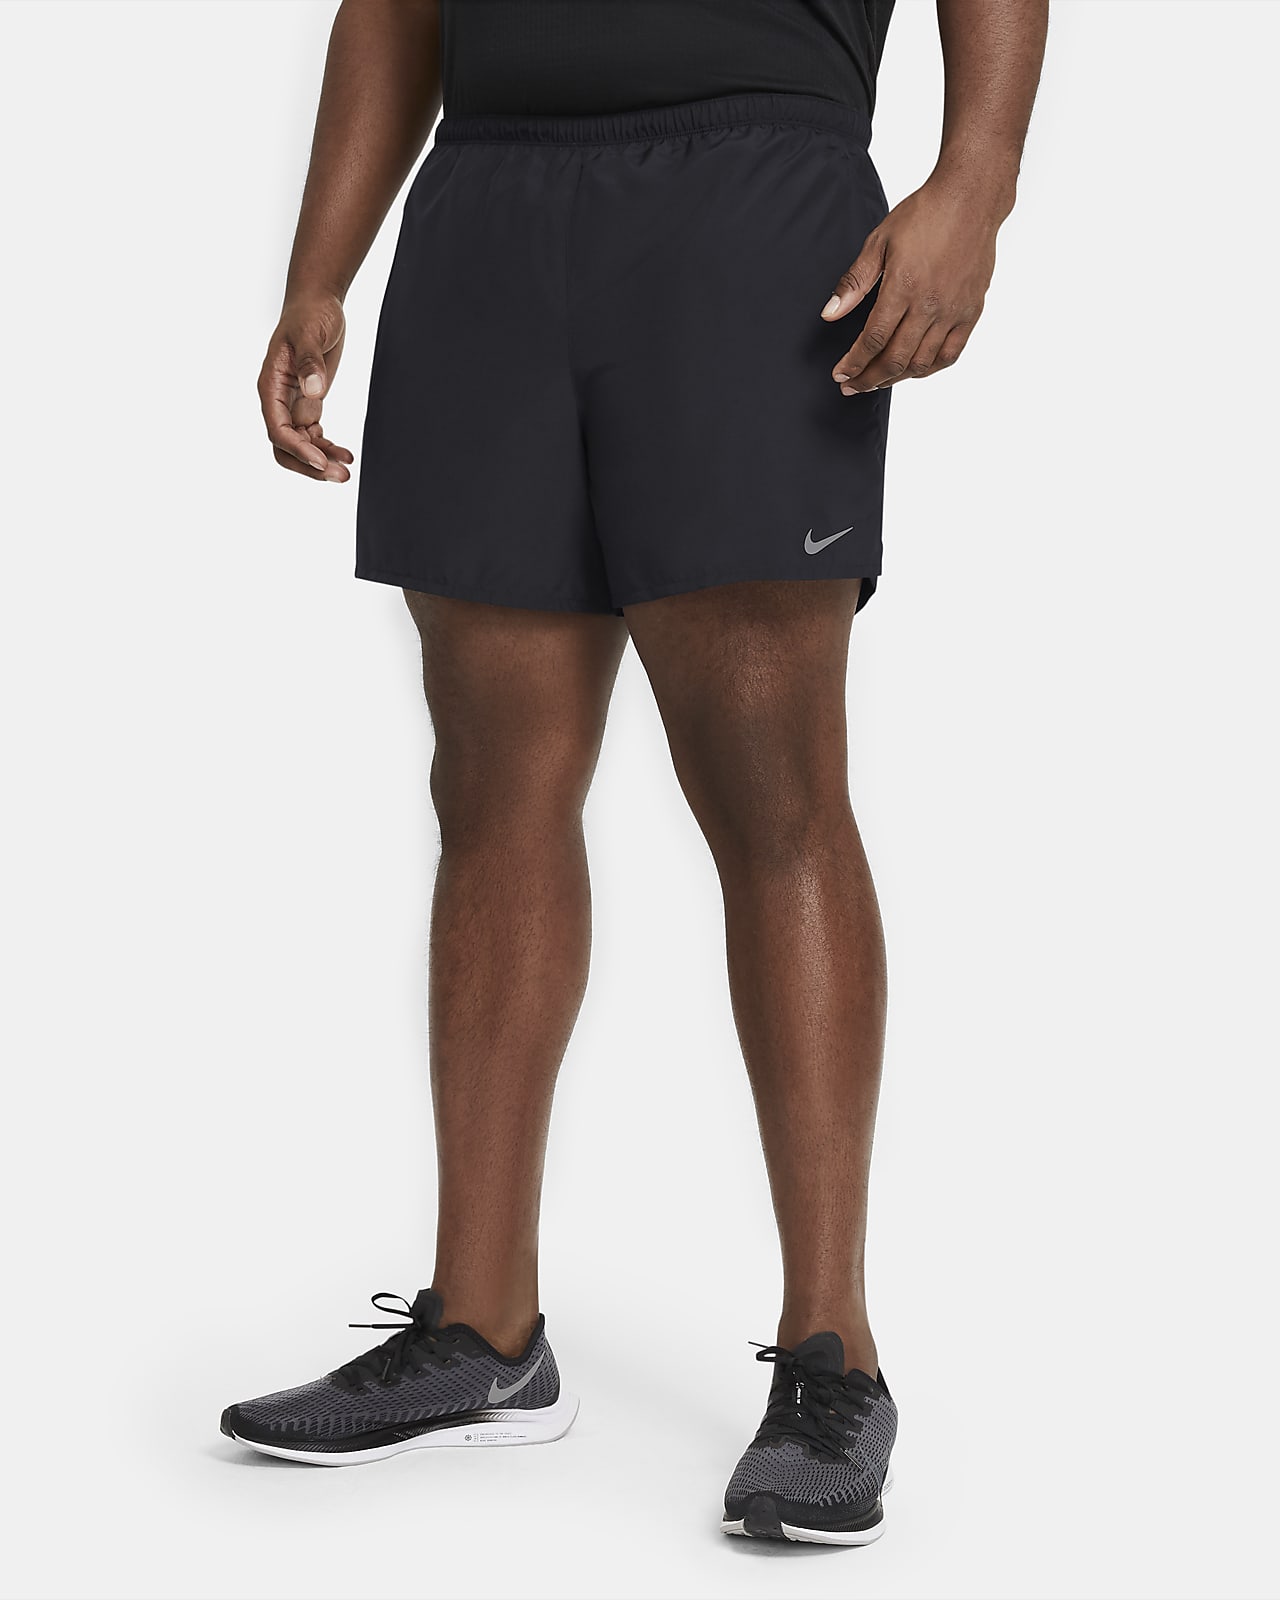 Nike Challenger 5 inch Men's Running Short - University Red/Reflective  Silver